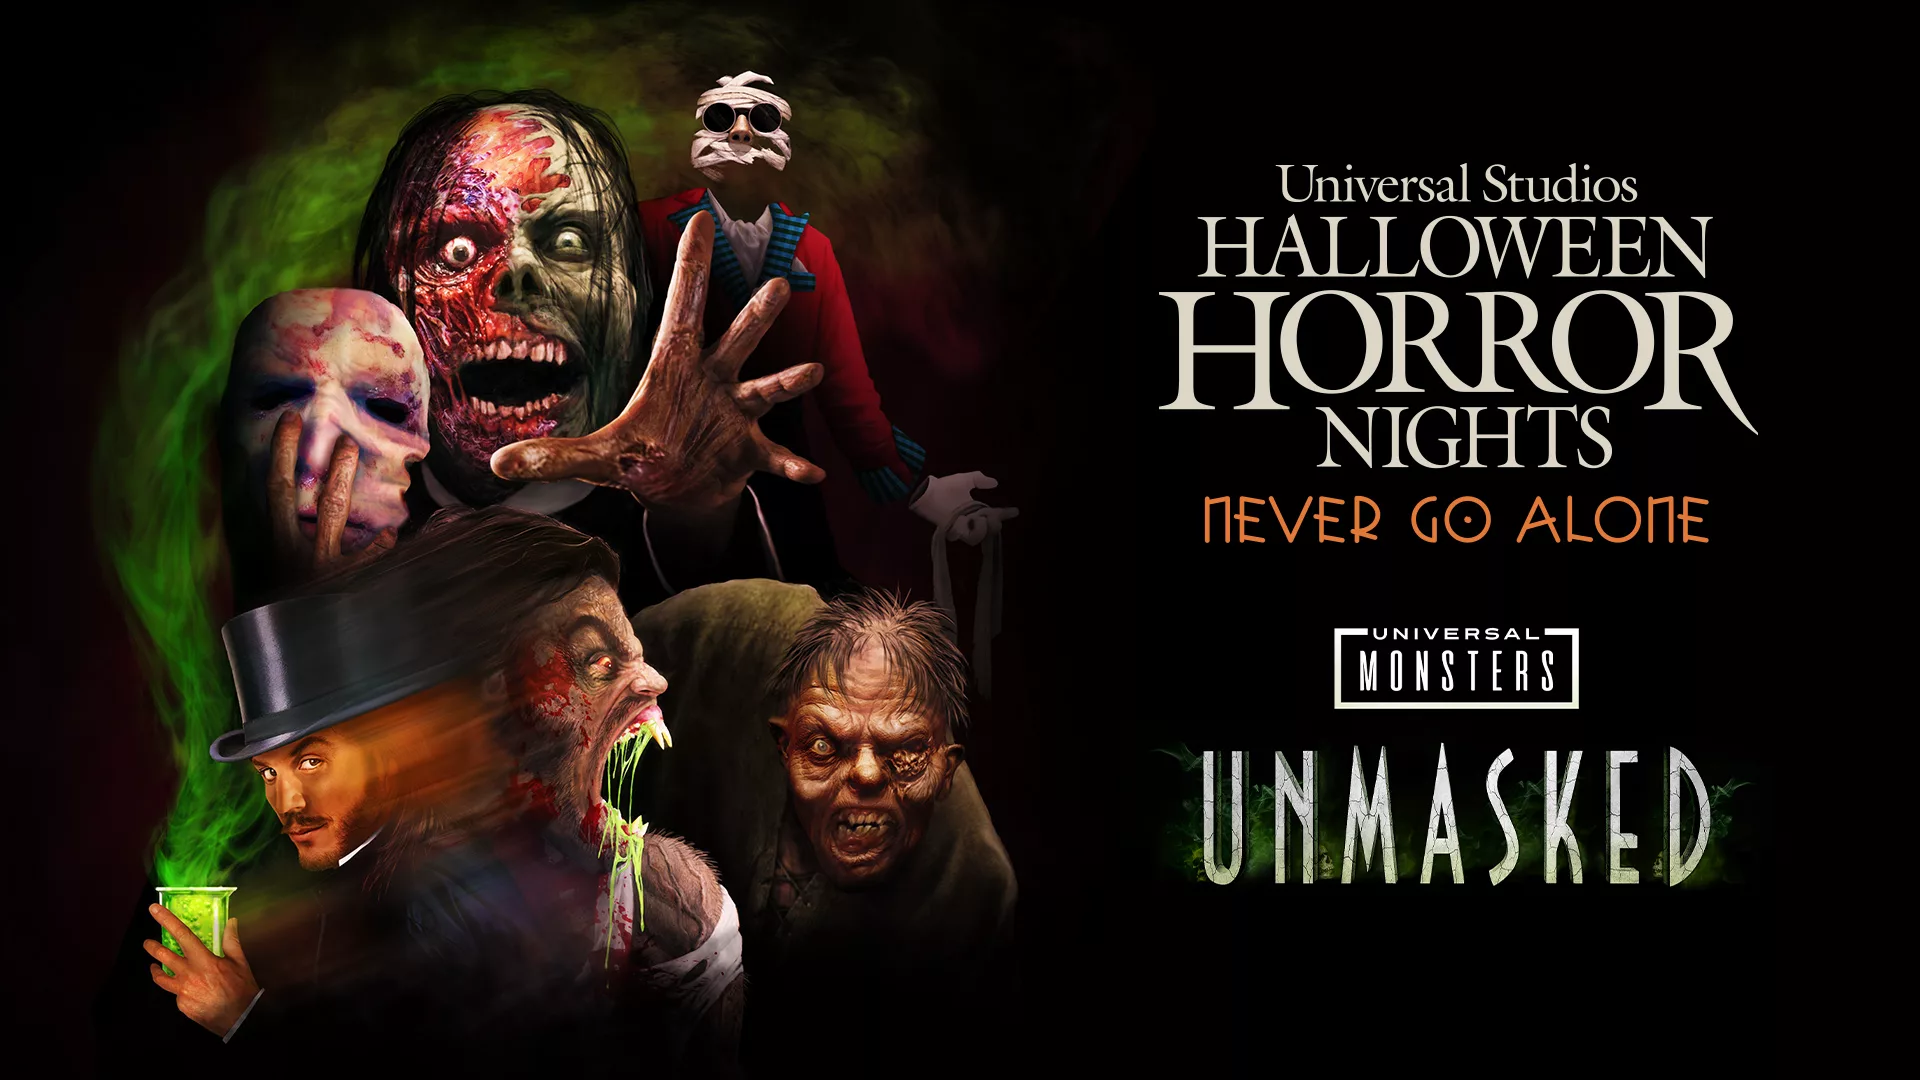 Universal Monsters: Unmasked Halloween Horror Nights